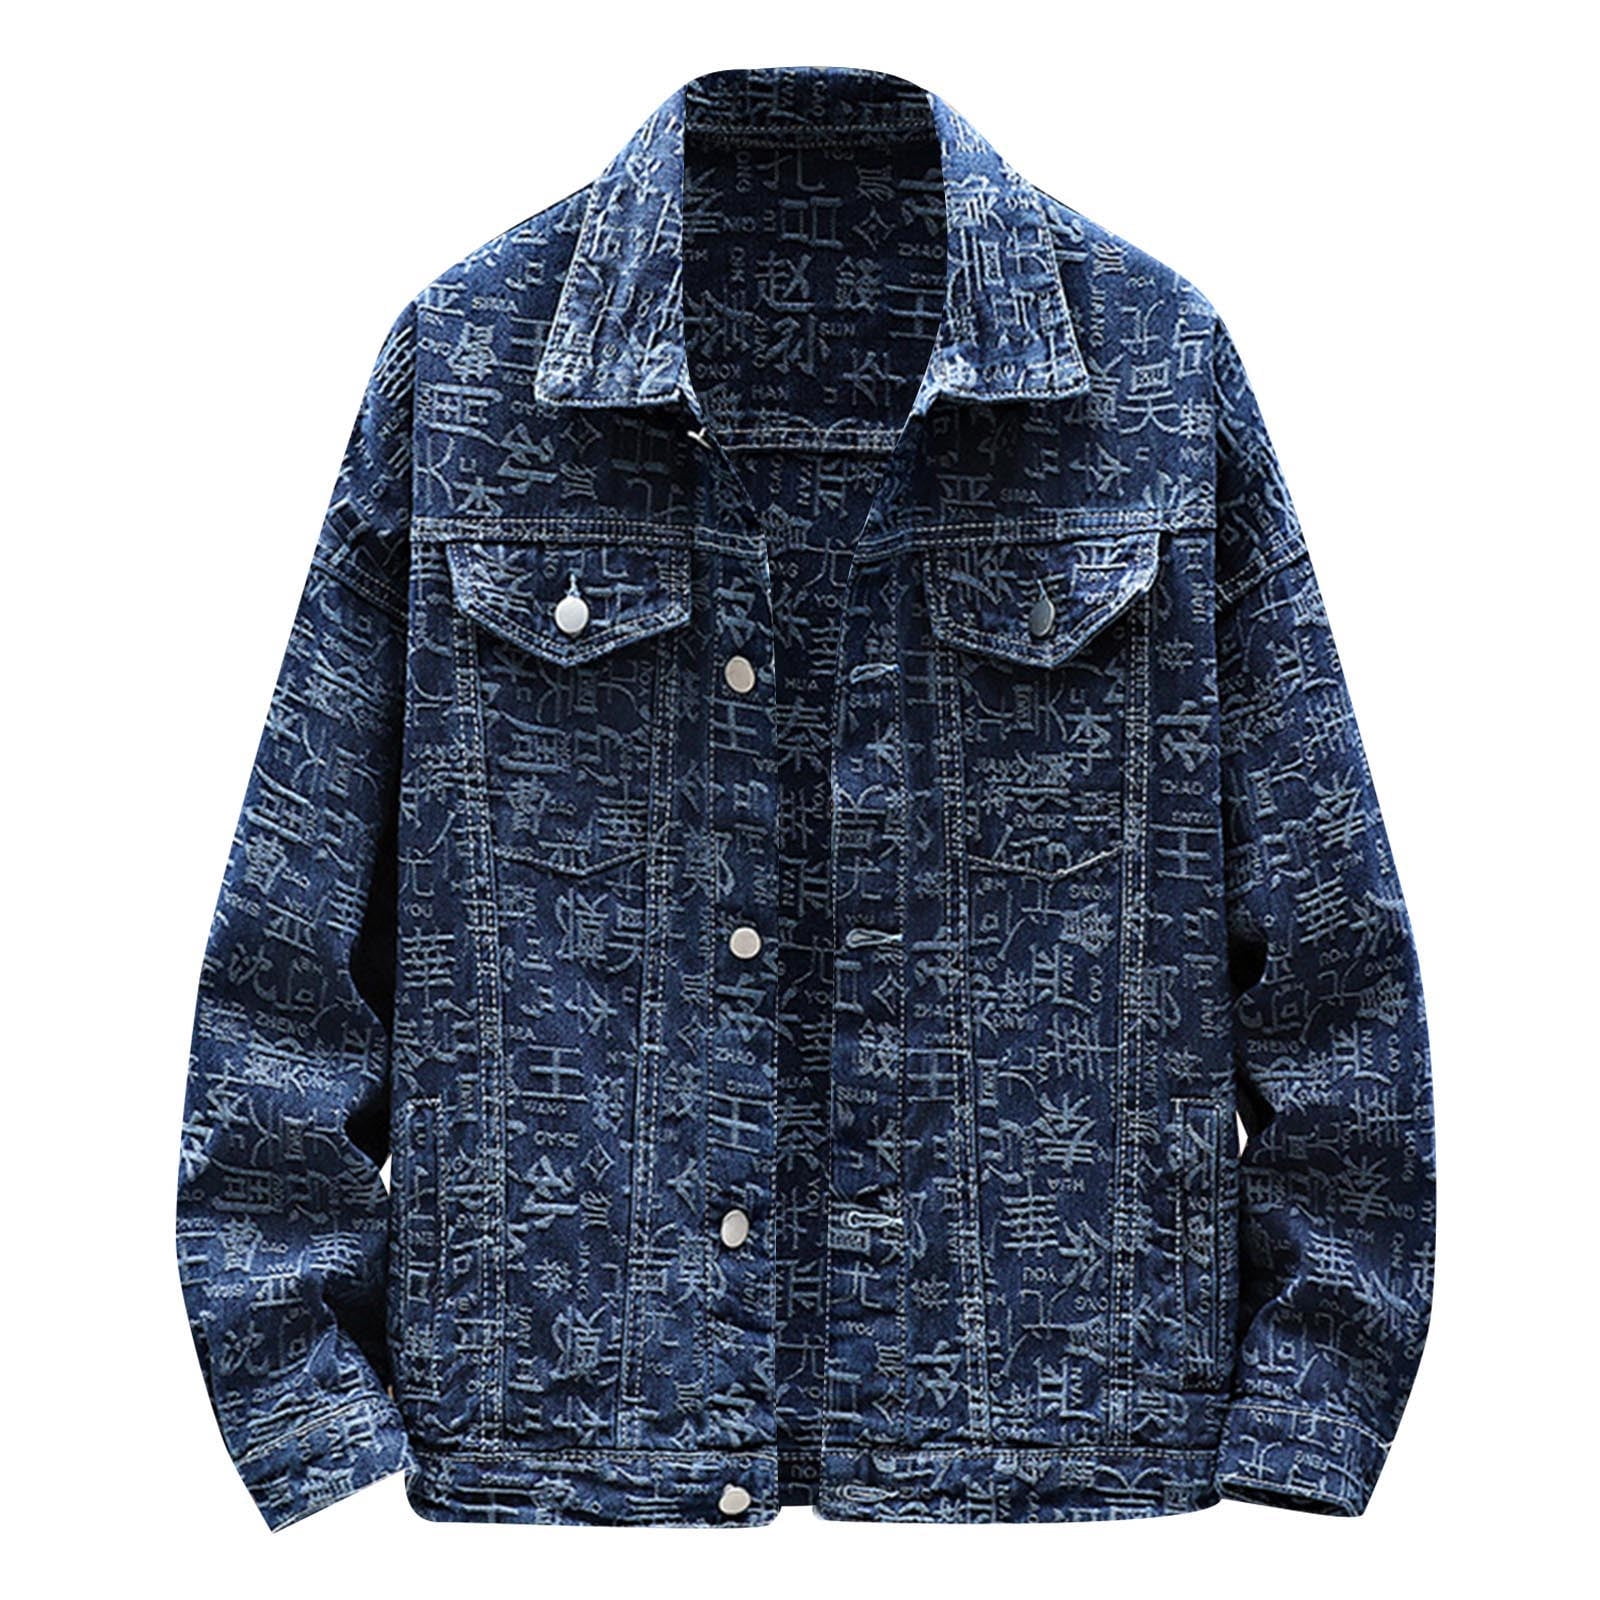 Men's Jacket Jean Denim Jacket Casual Slim Fit Button Down Trucker Jacket  Coat Fashion, M-3XL